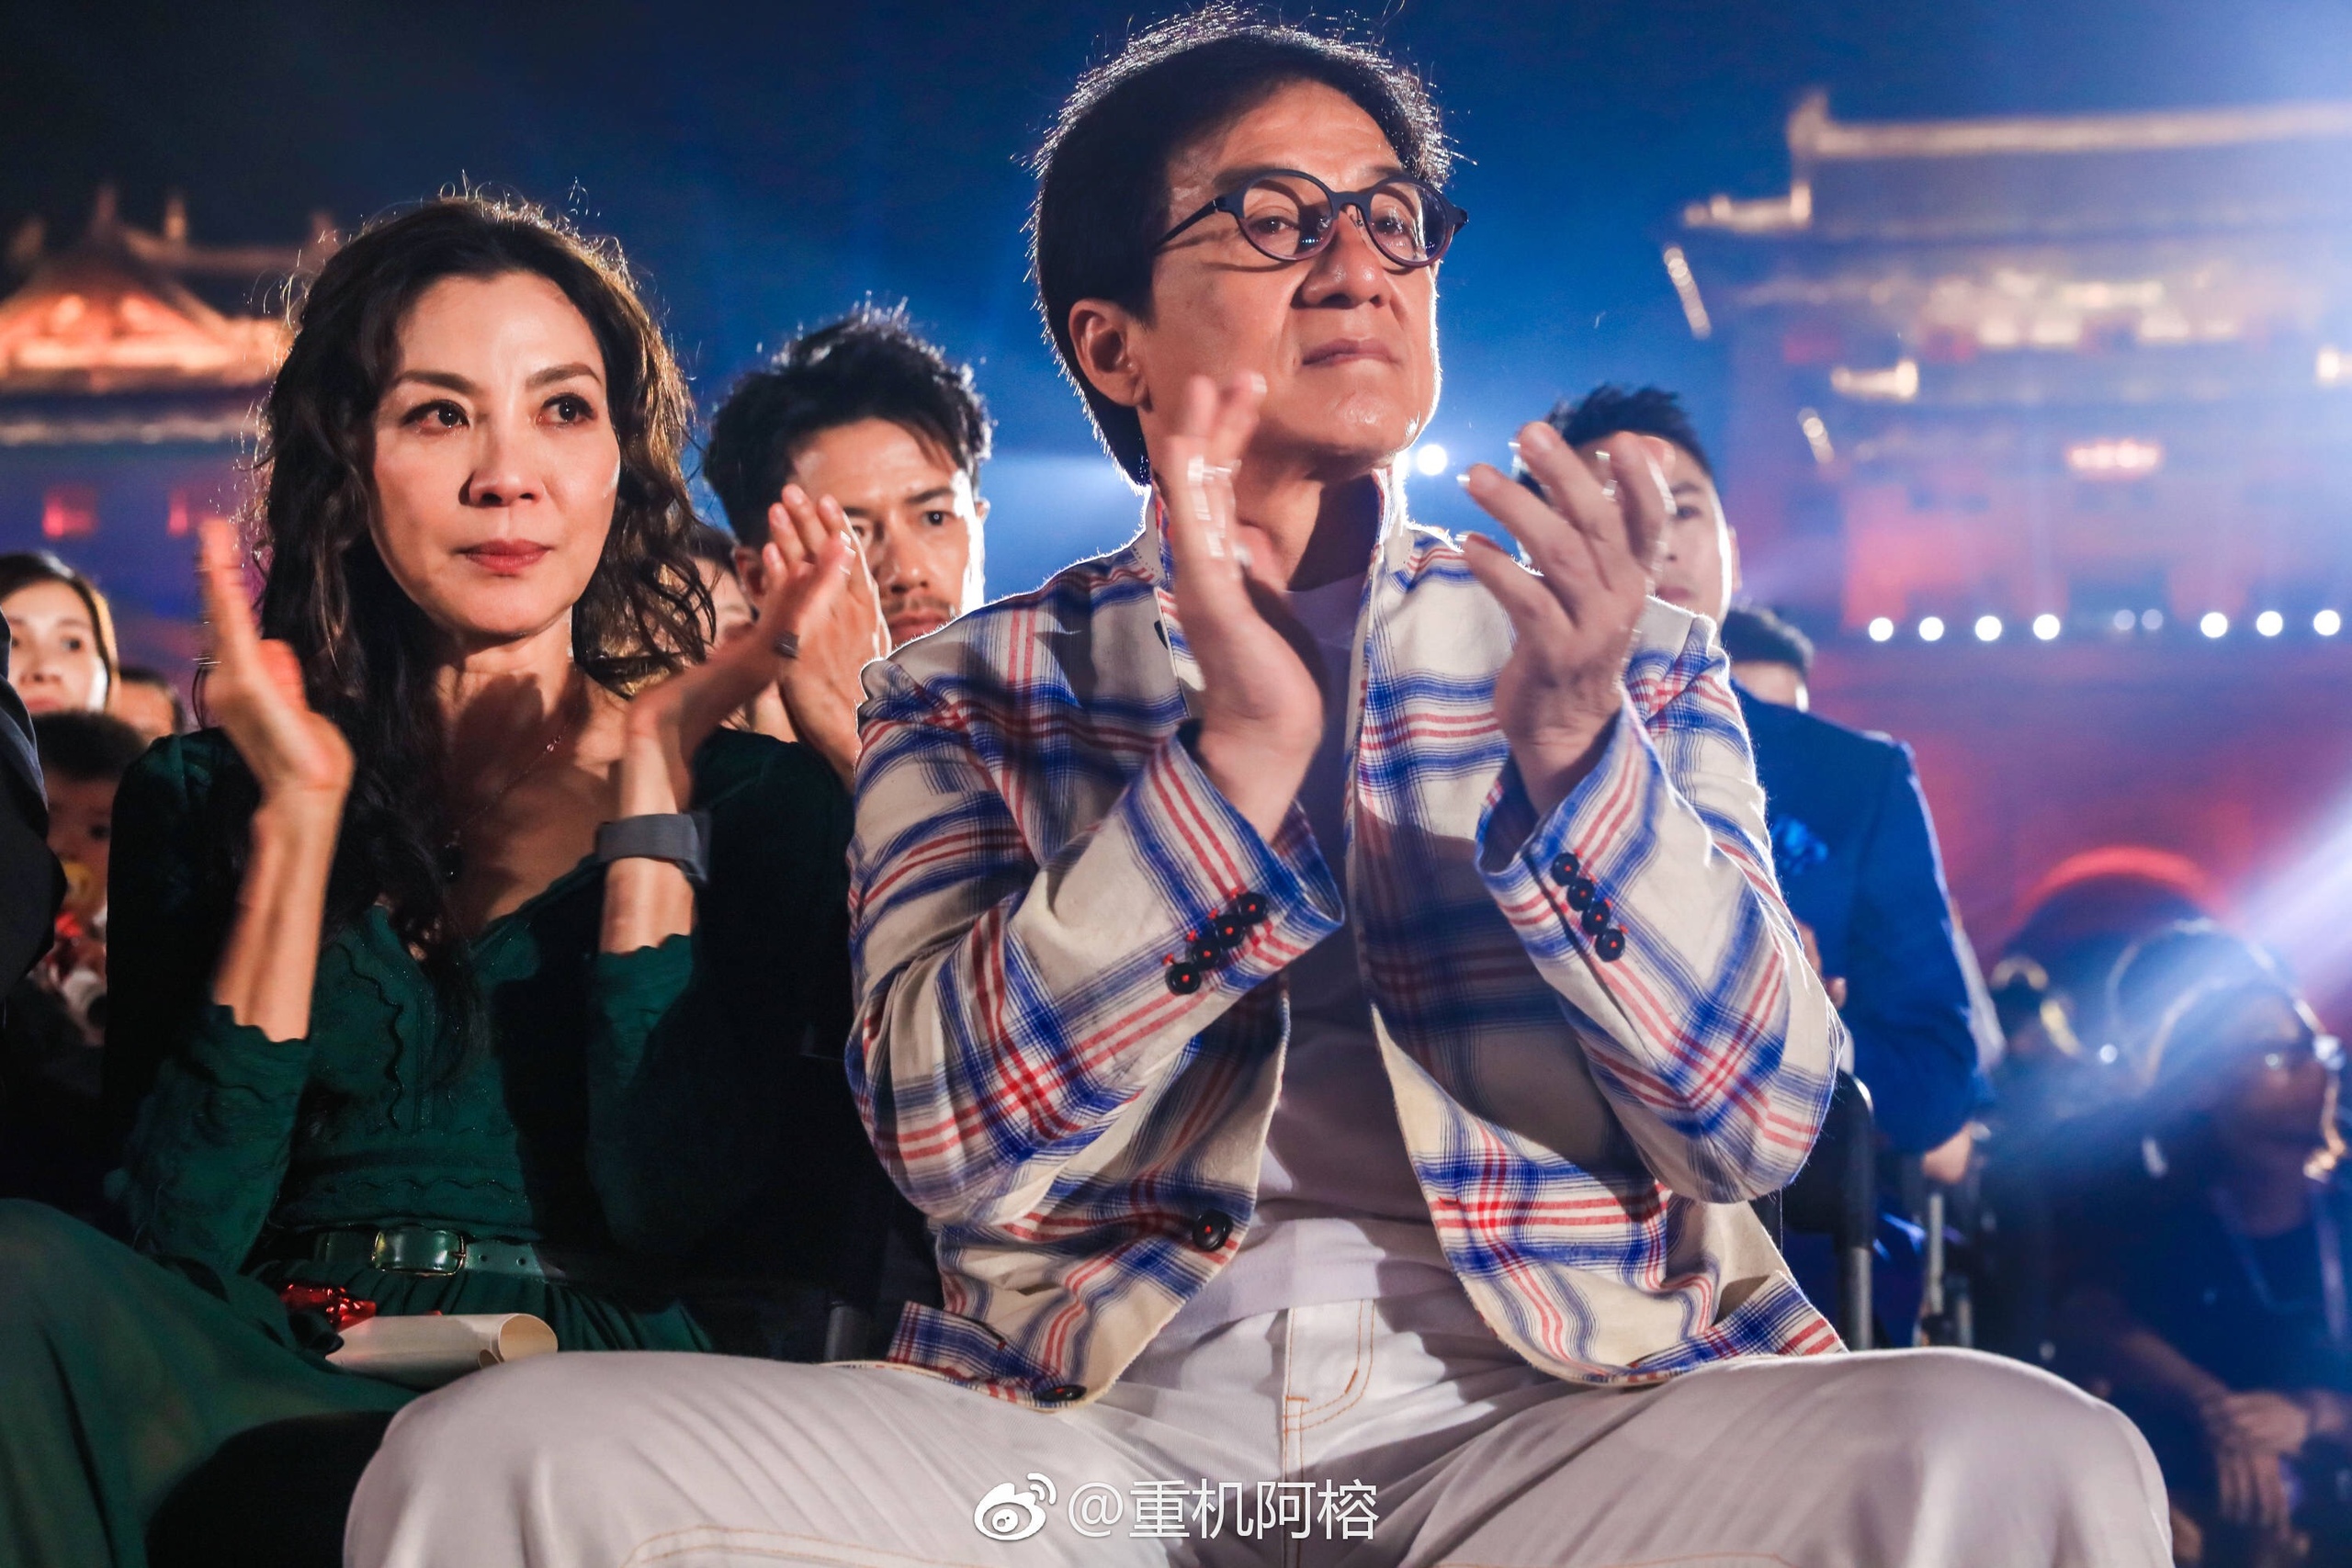 Film De Jackie Chan Related Keywords & Suggestions - Film De